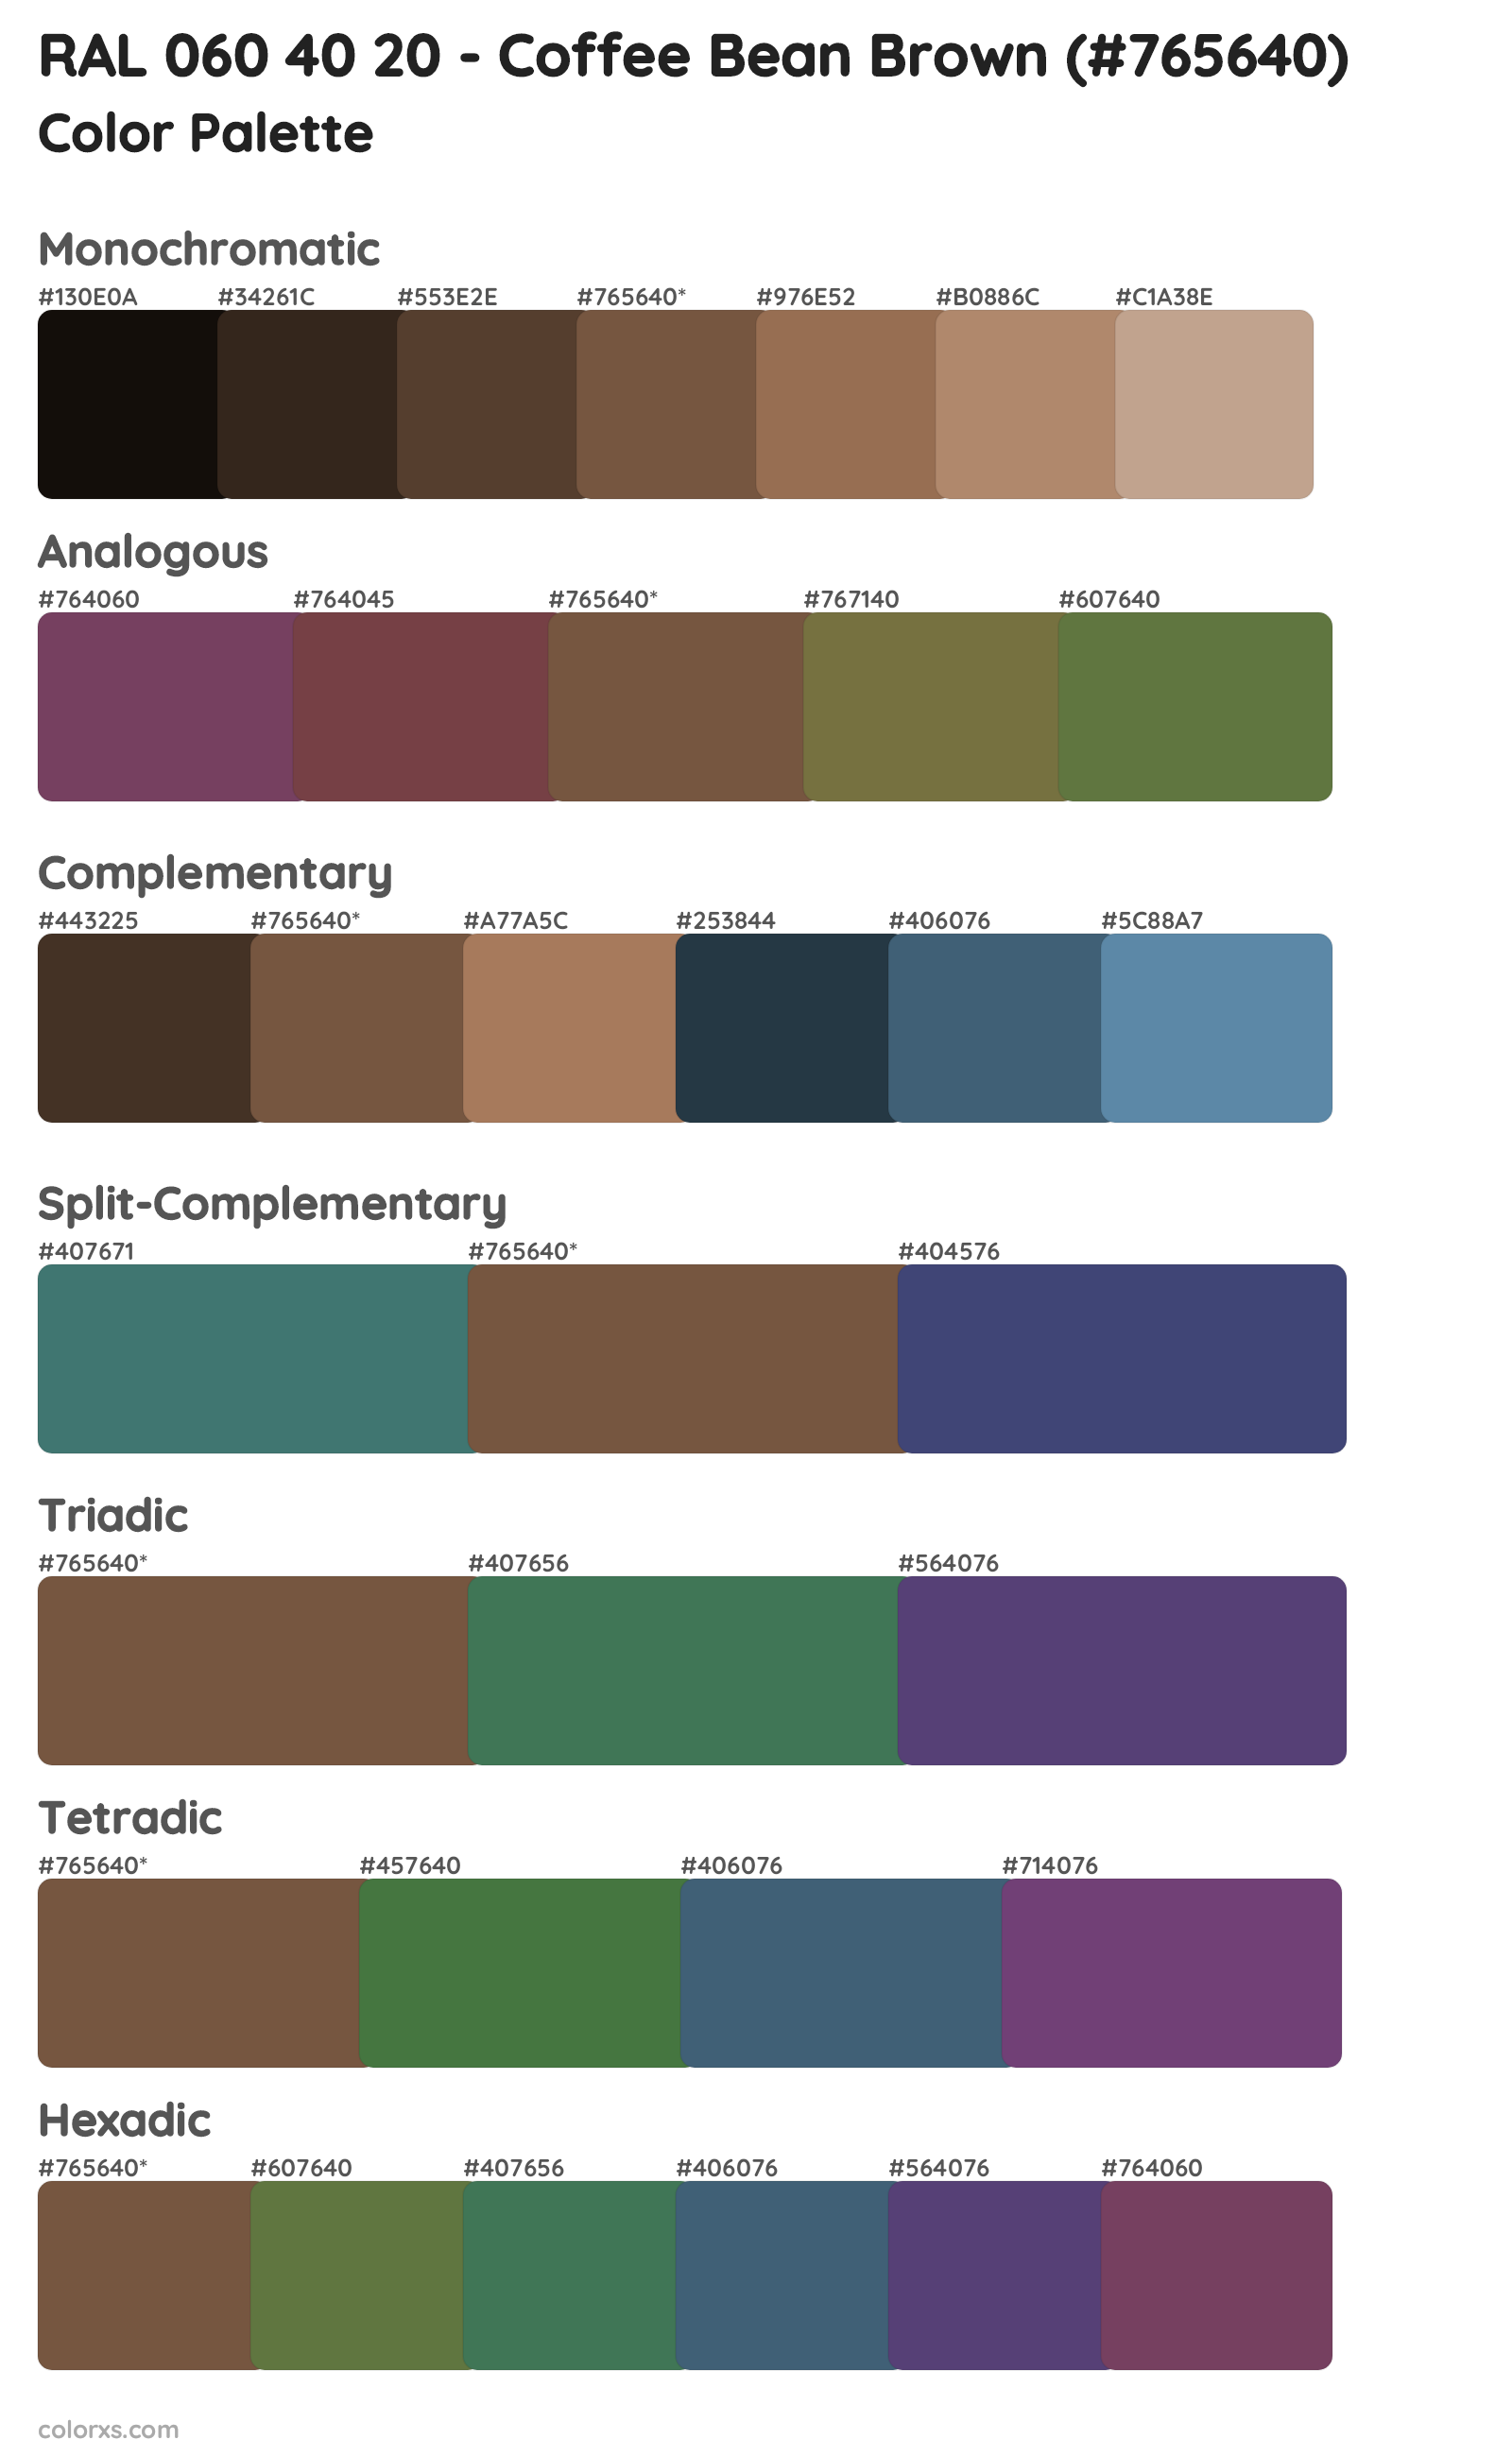 RAL 060 40 20 - Coffee Bean Brown Color Scheme Palettes